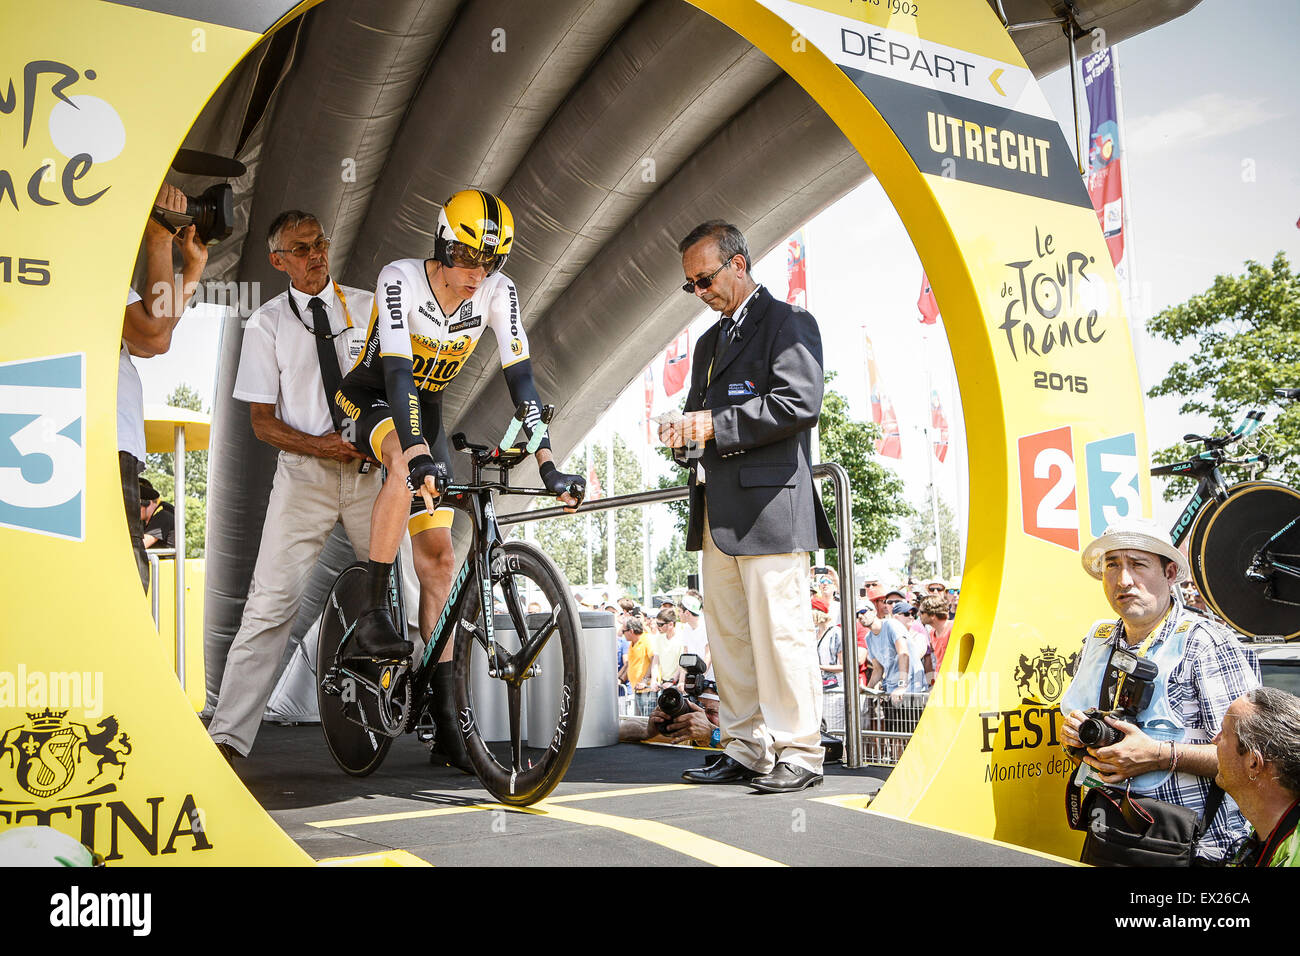 Utrecht, Paesi Bassi. 4 Luglio, 2015. Tour de France Time Trial Stage, Robert GESINK, Team Lotto Jumbo Credito: Jan de Wild/Alamy Live News Foto Stock